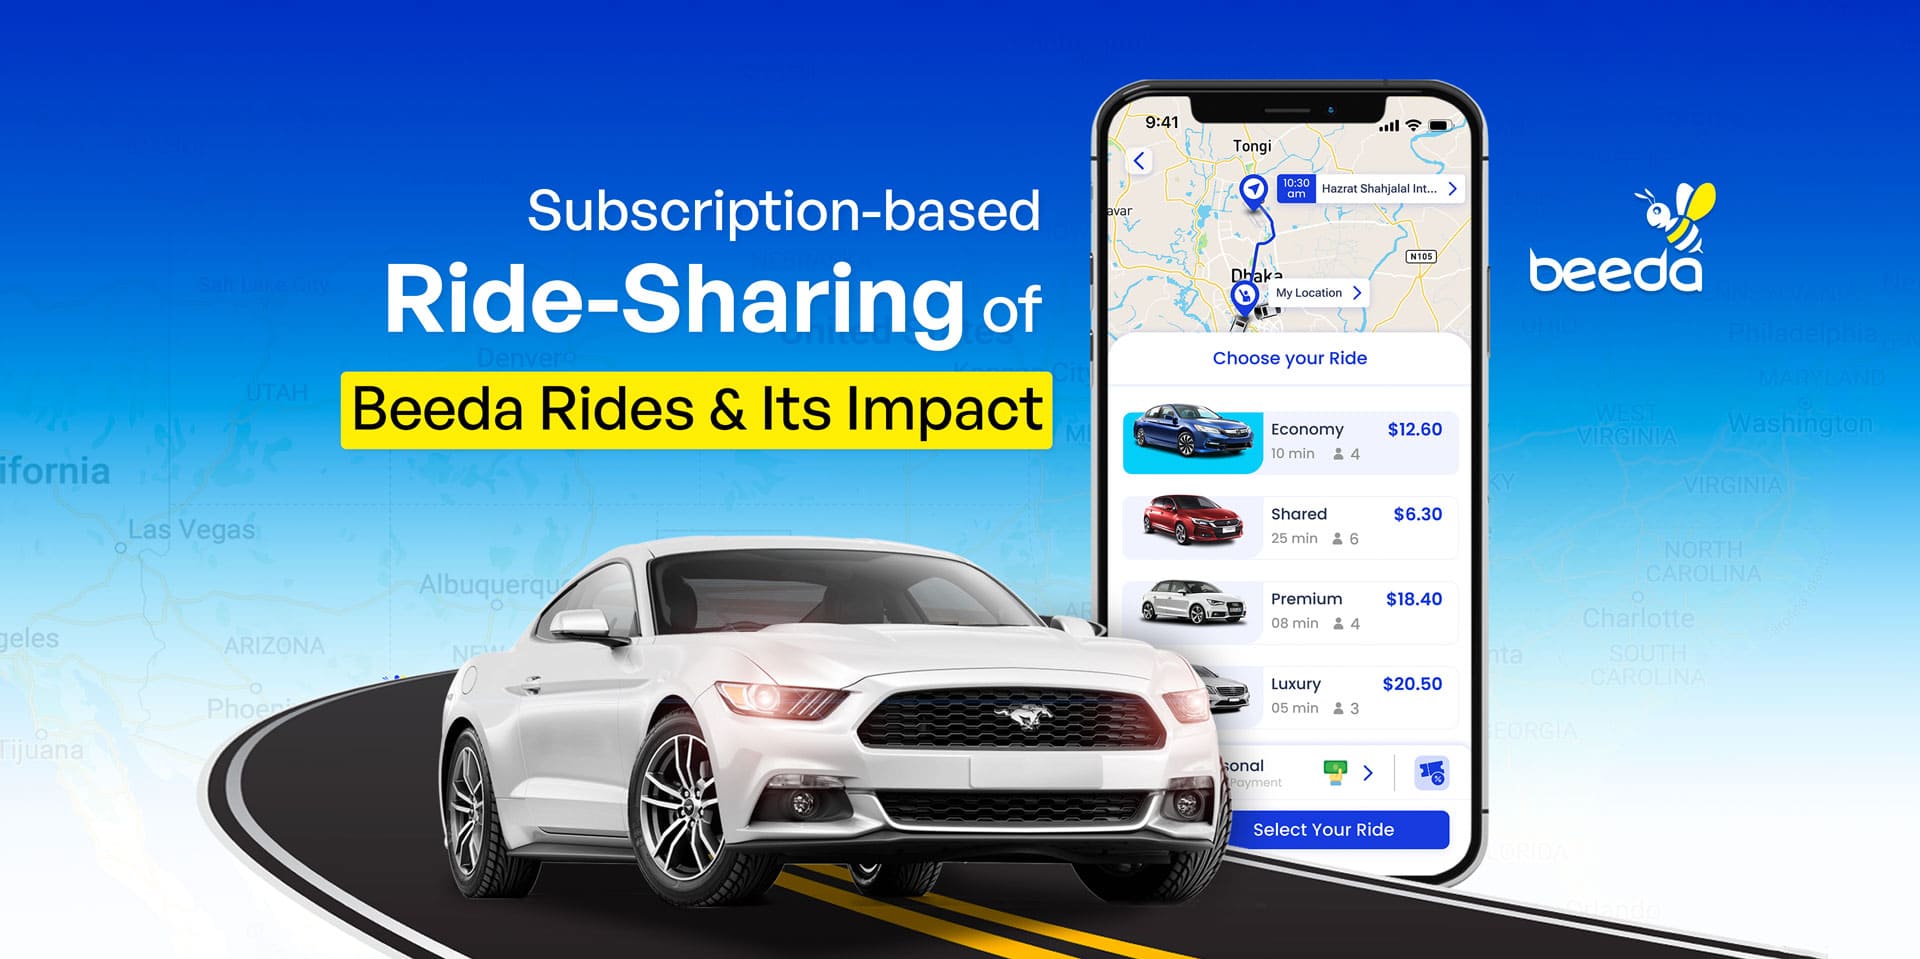 Subscription-Based Ride-Sharing of Beeda Rides & Its Impact